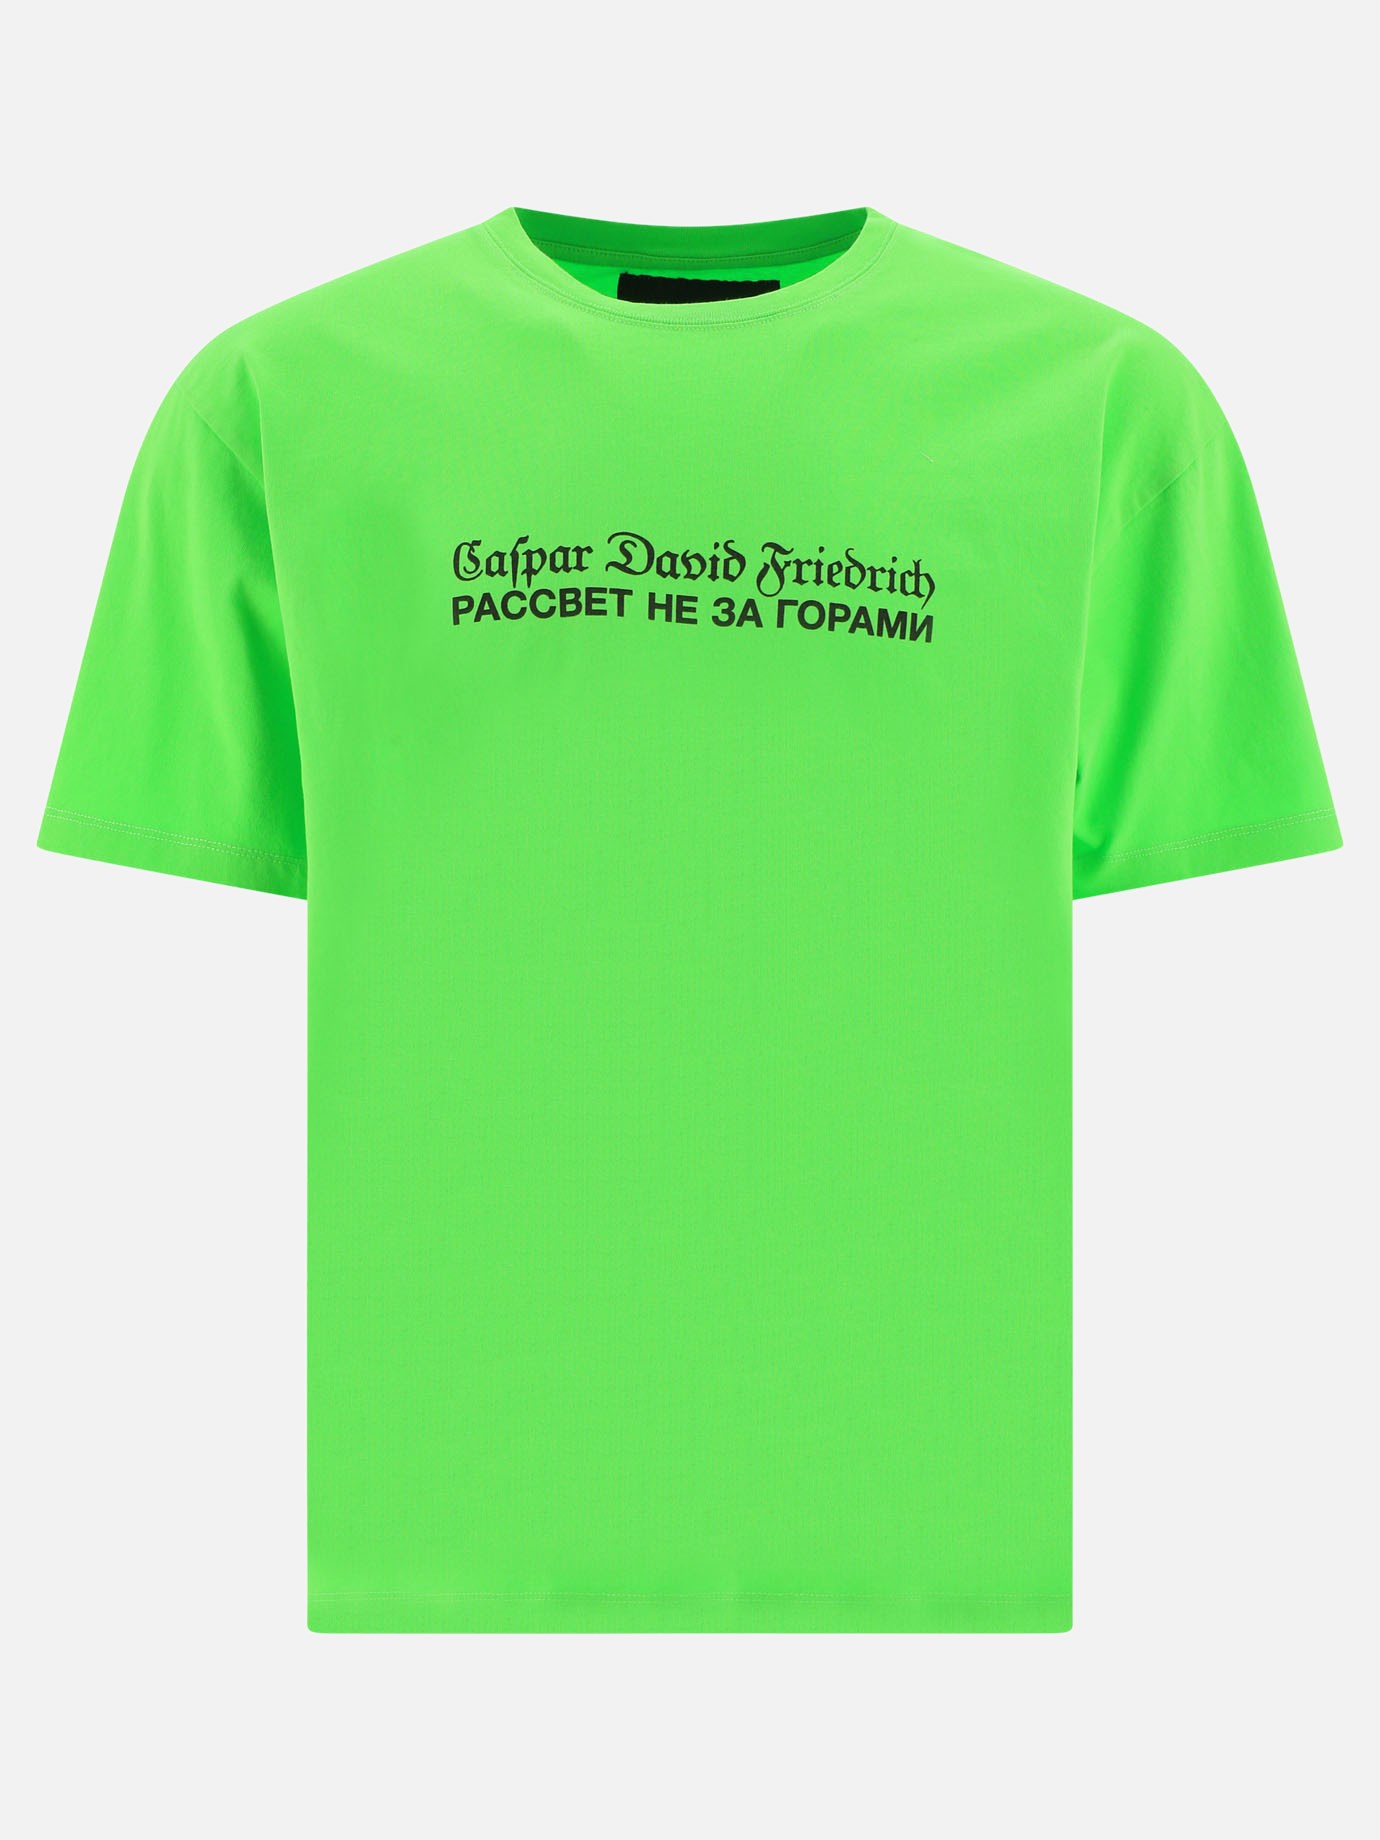 T-shirt  Caspar David Friedrich by Paccbet - 3